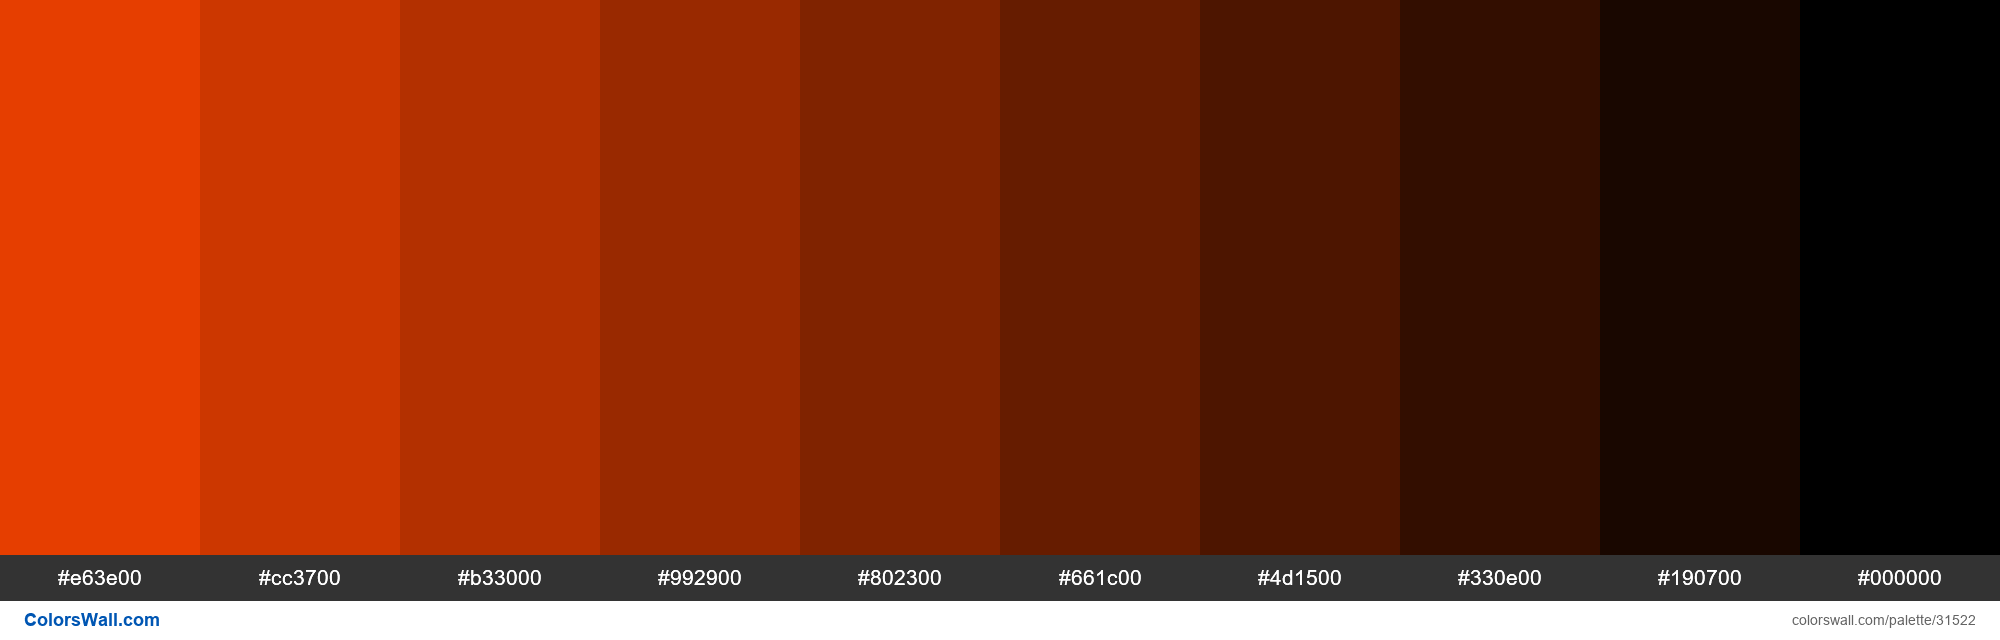 Bliv byld trofast colorswall on Twitter: "Shades X11 color Orange Red #FF4500 hex #e63e00,  #cc3700, #b33000, #992900, #802300, #661c00, #4d1500, #330e00, #190700,  #000000 #colors #palette https://t.co/k6i0D93xwA https://t.co/bXPNhv7l8T" /  Twitter